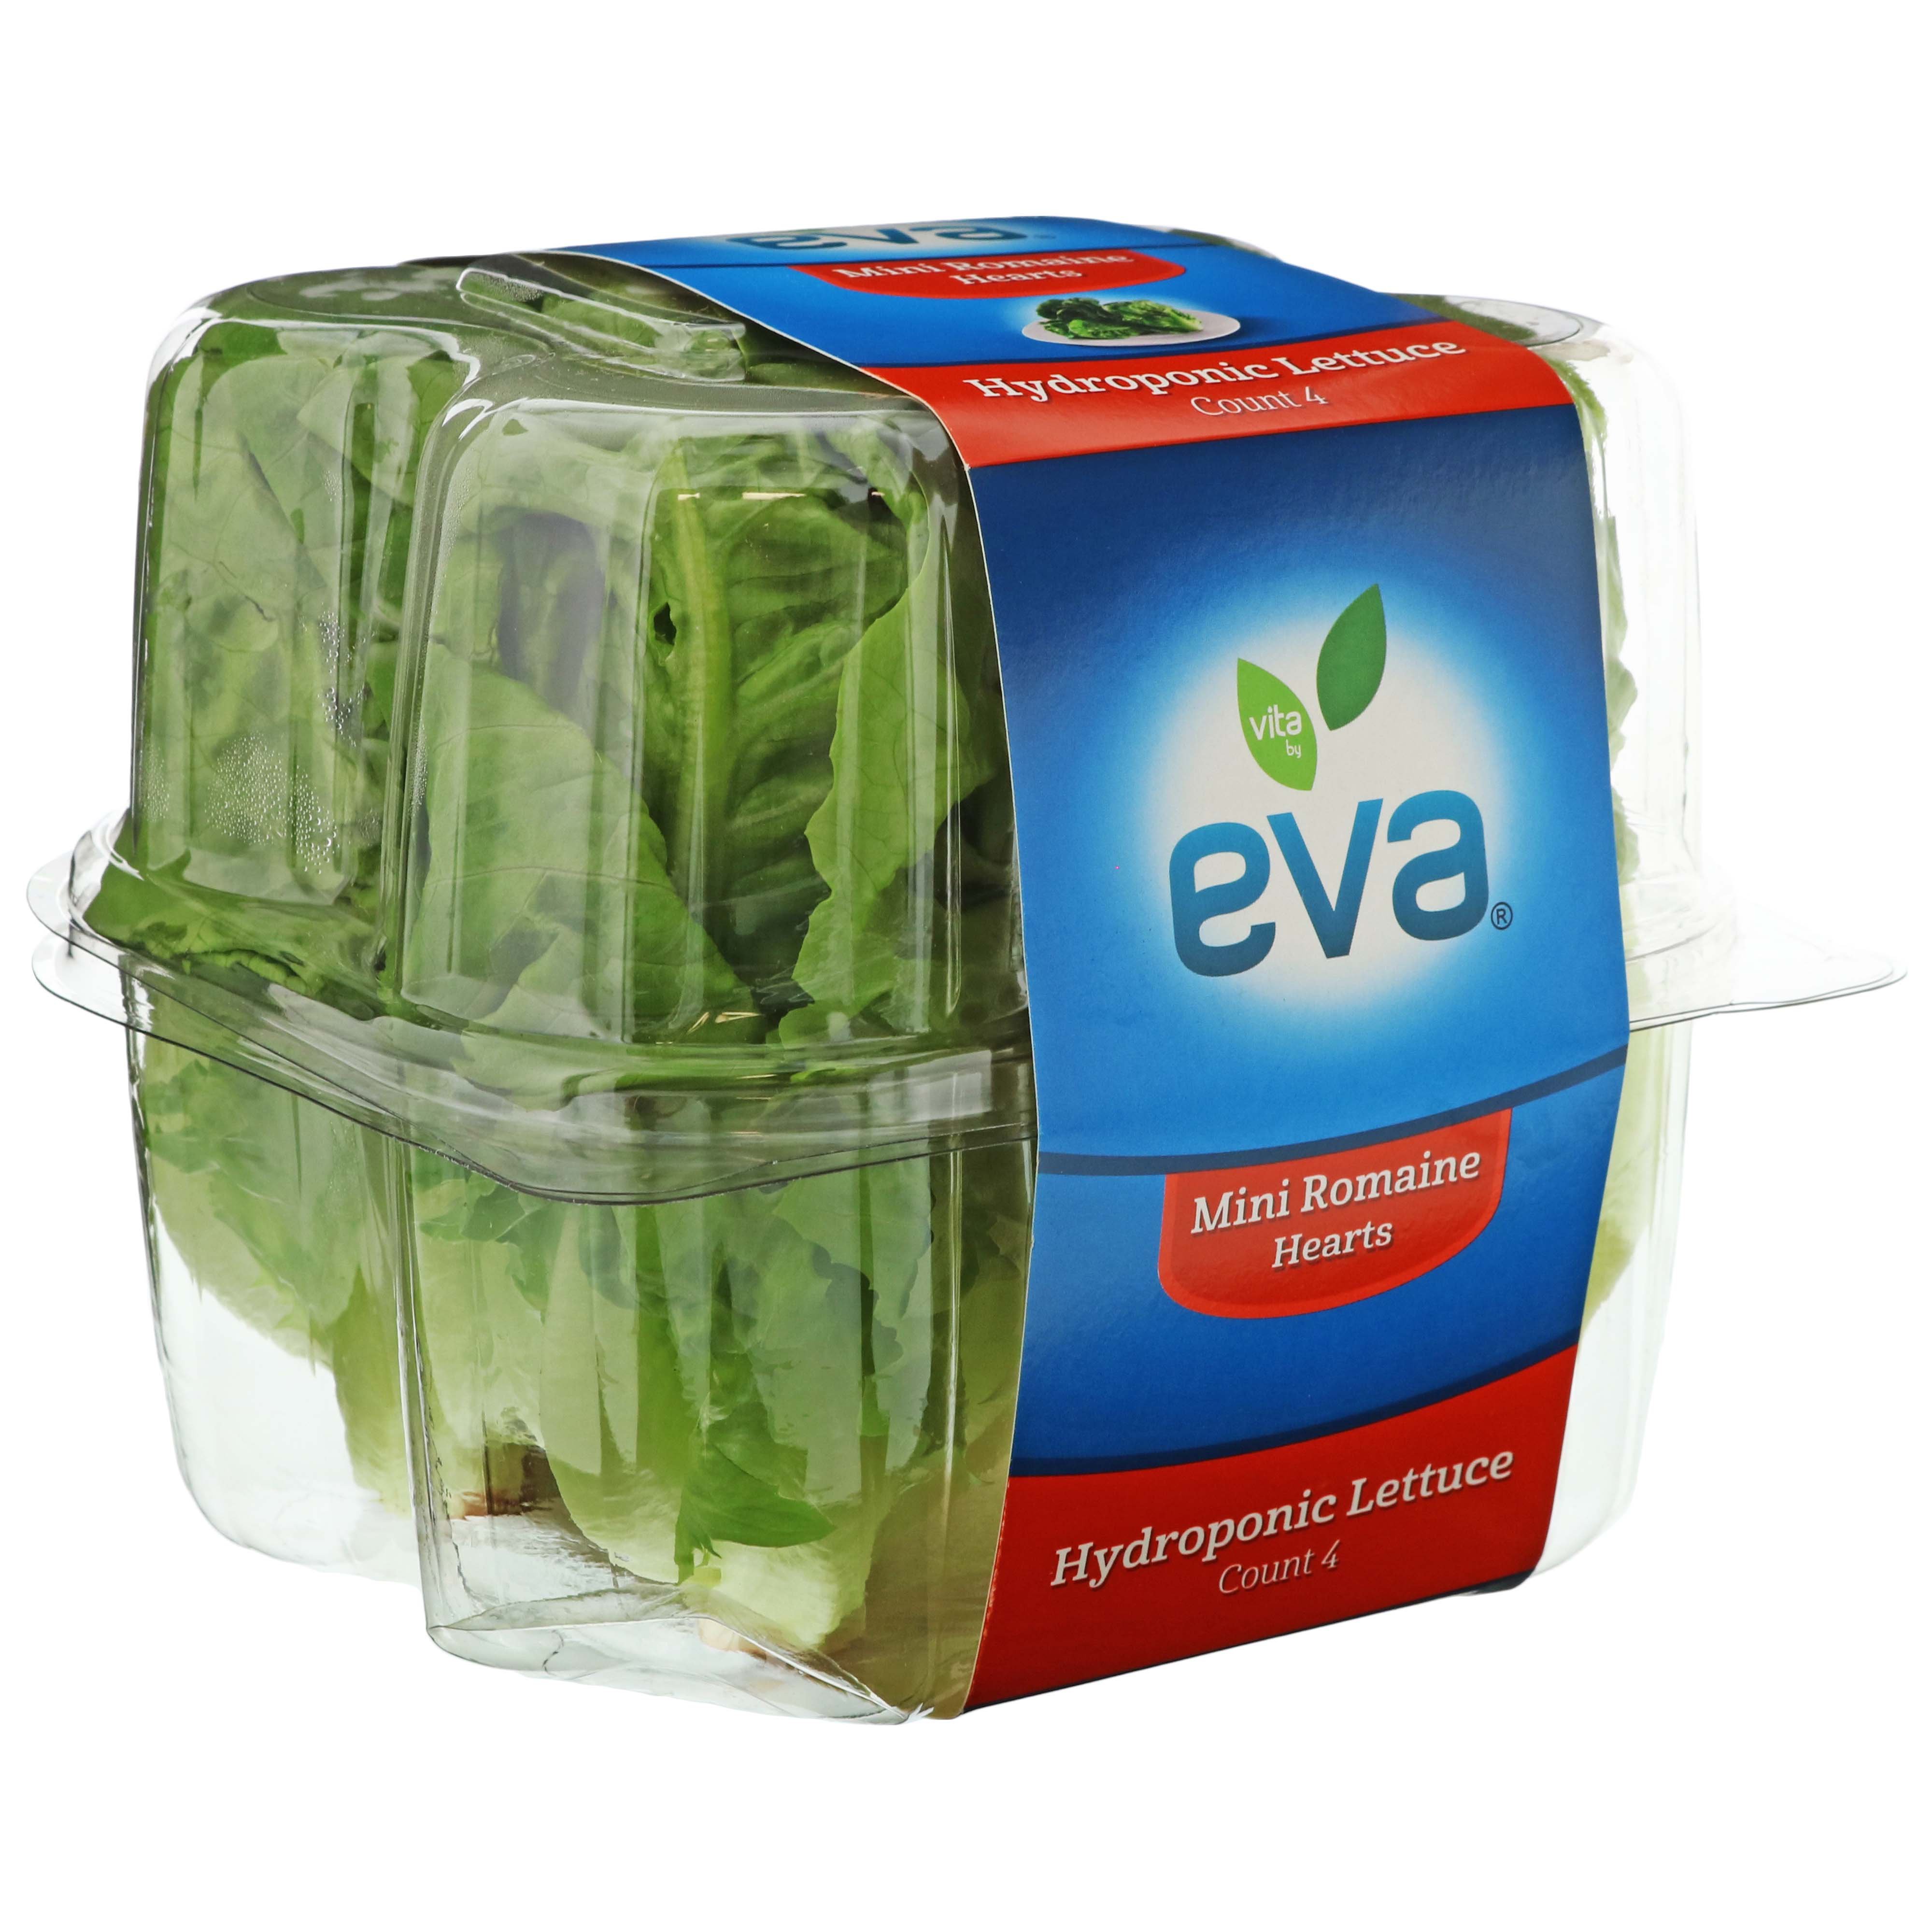 Eva Mini Romaine Hearts - Shop Lettuce & Leafy Greens at H-E-B